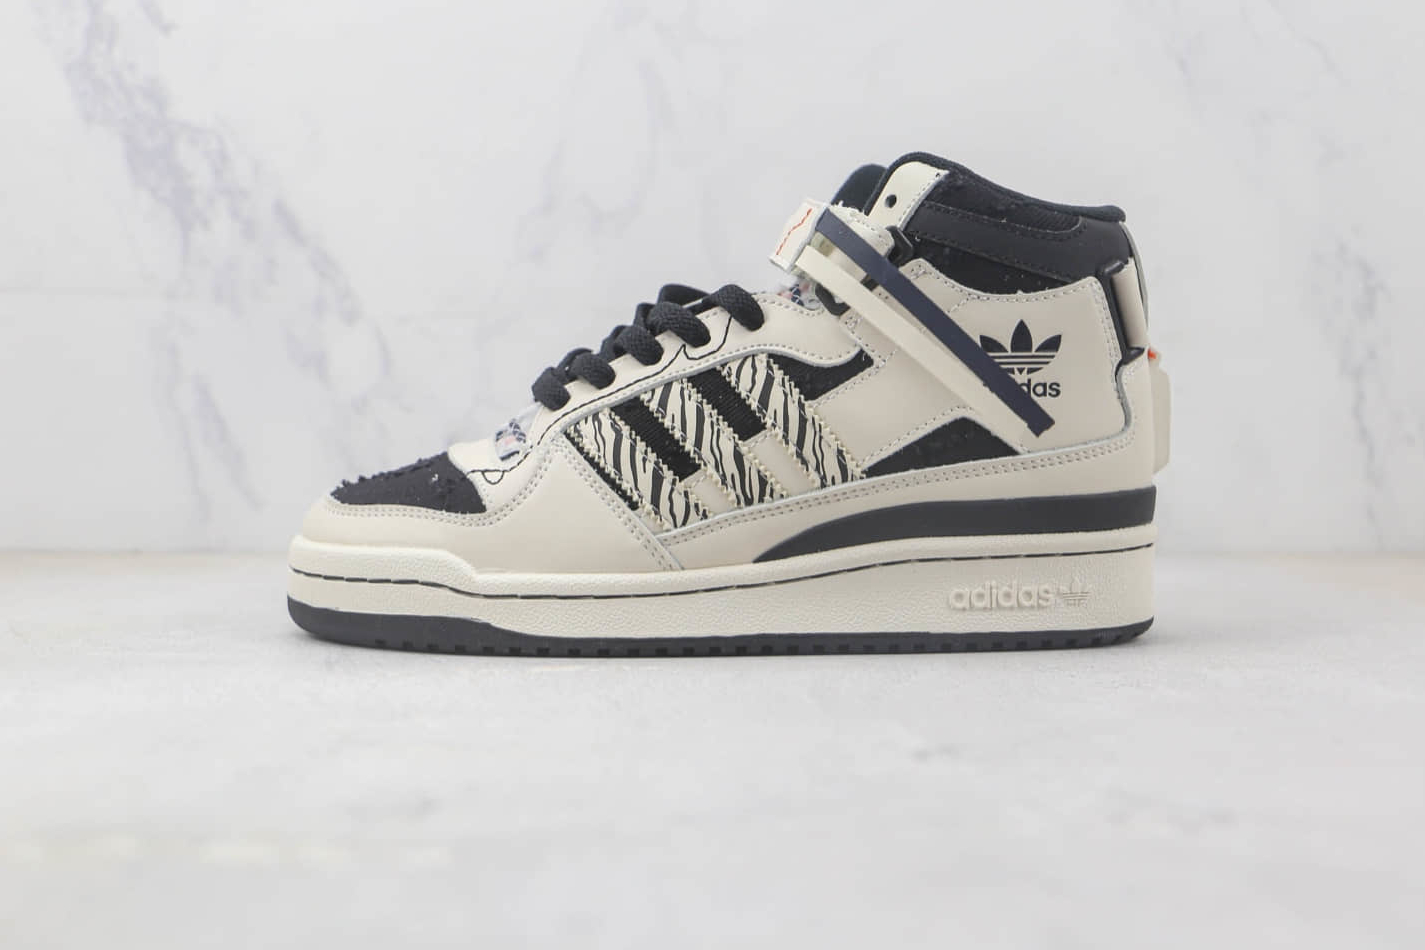 Adidas Originals Forum Mid Sneakers Creamy White Black GX3957 - Unisex Fashion Footwear